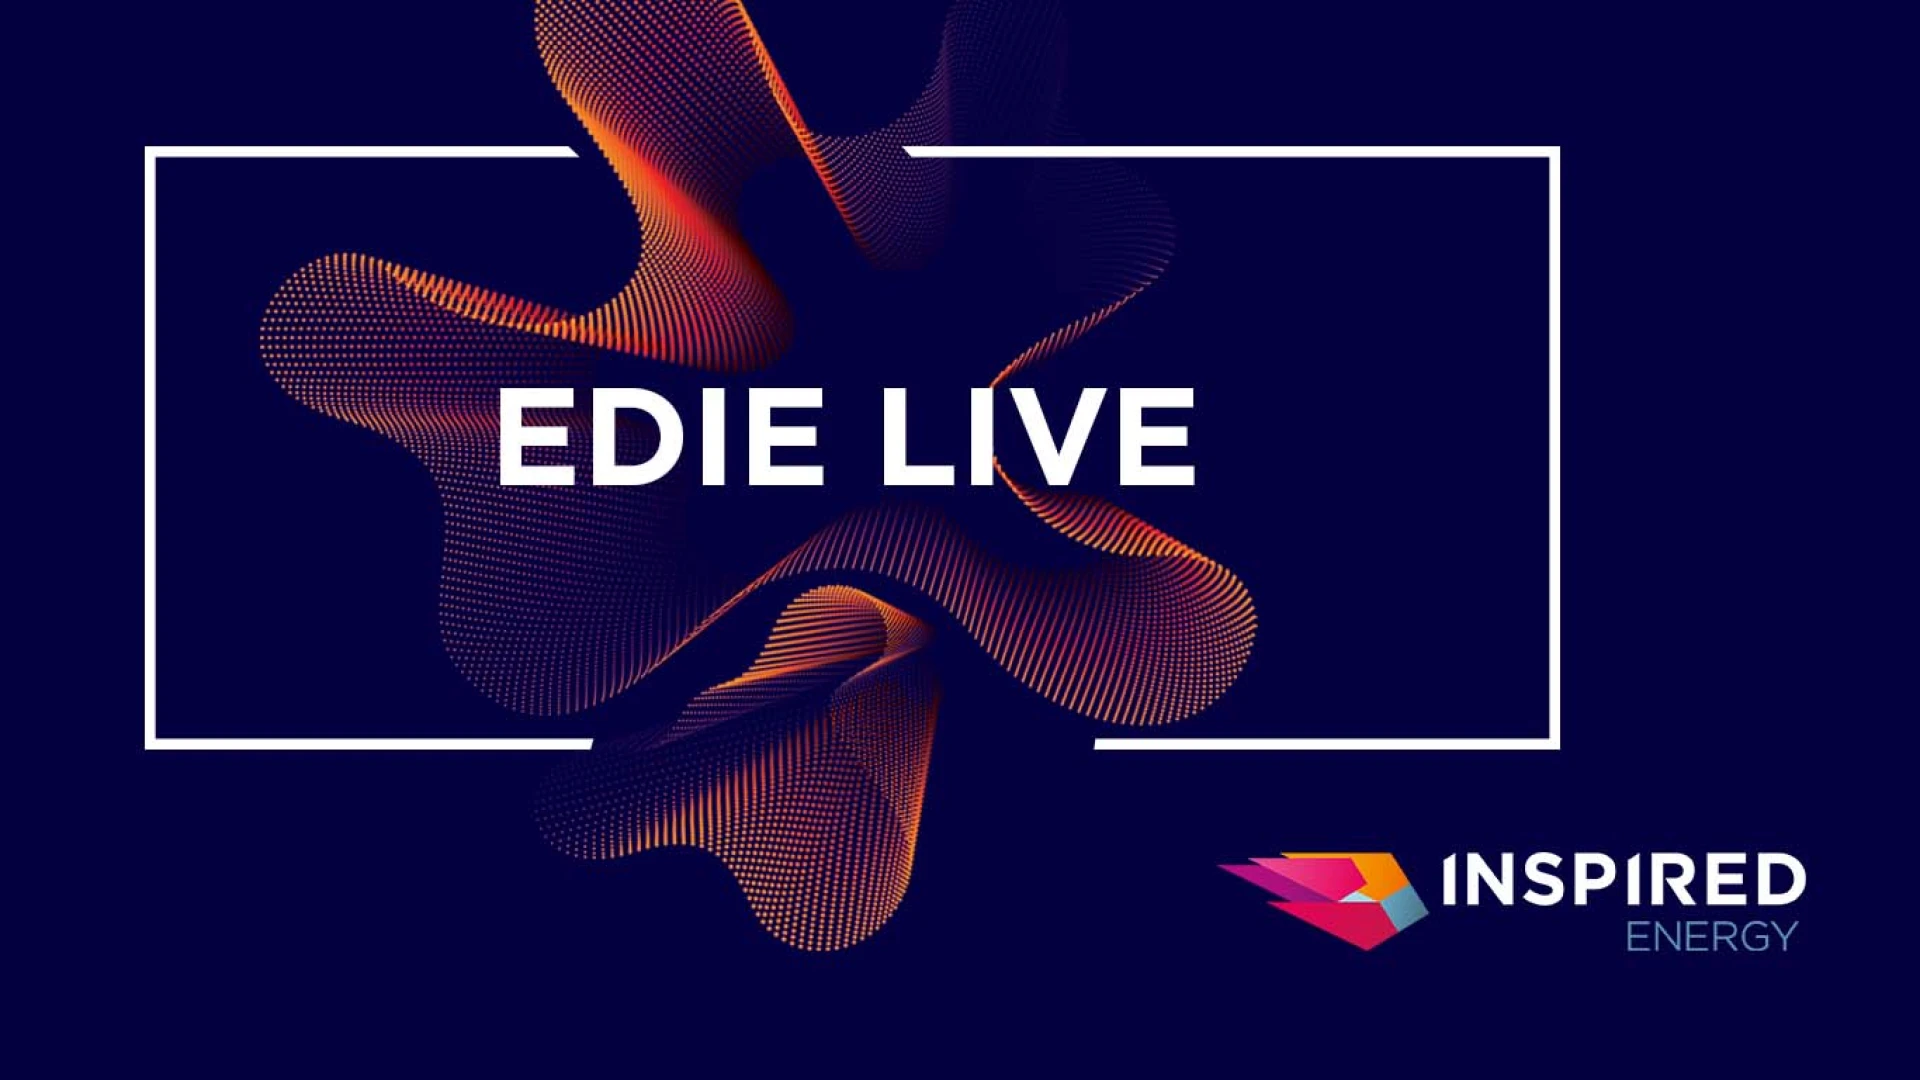 Inspired Energy - Edie Live, 